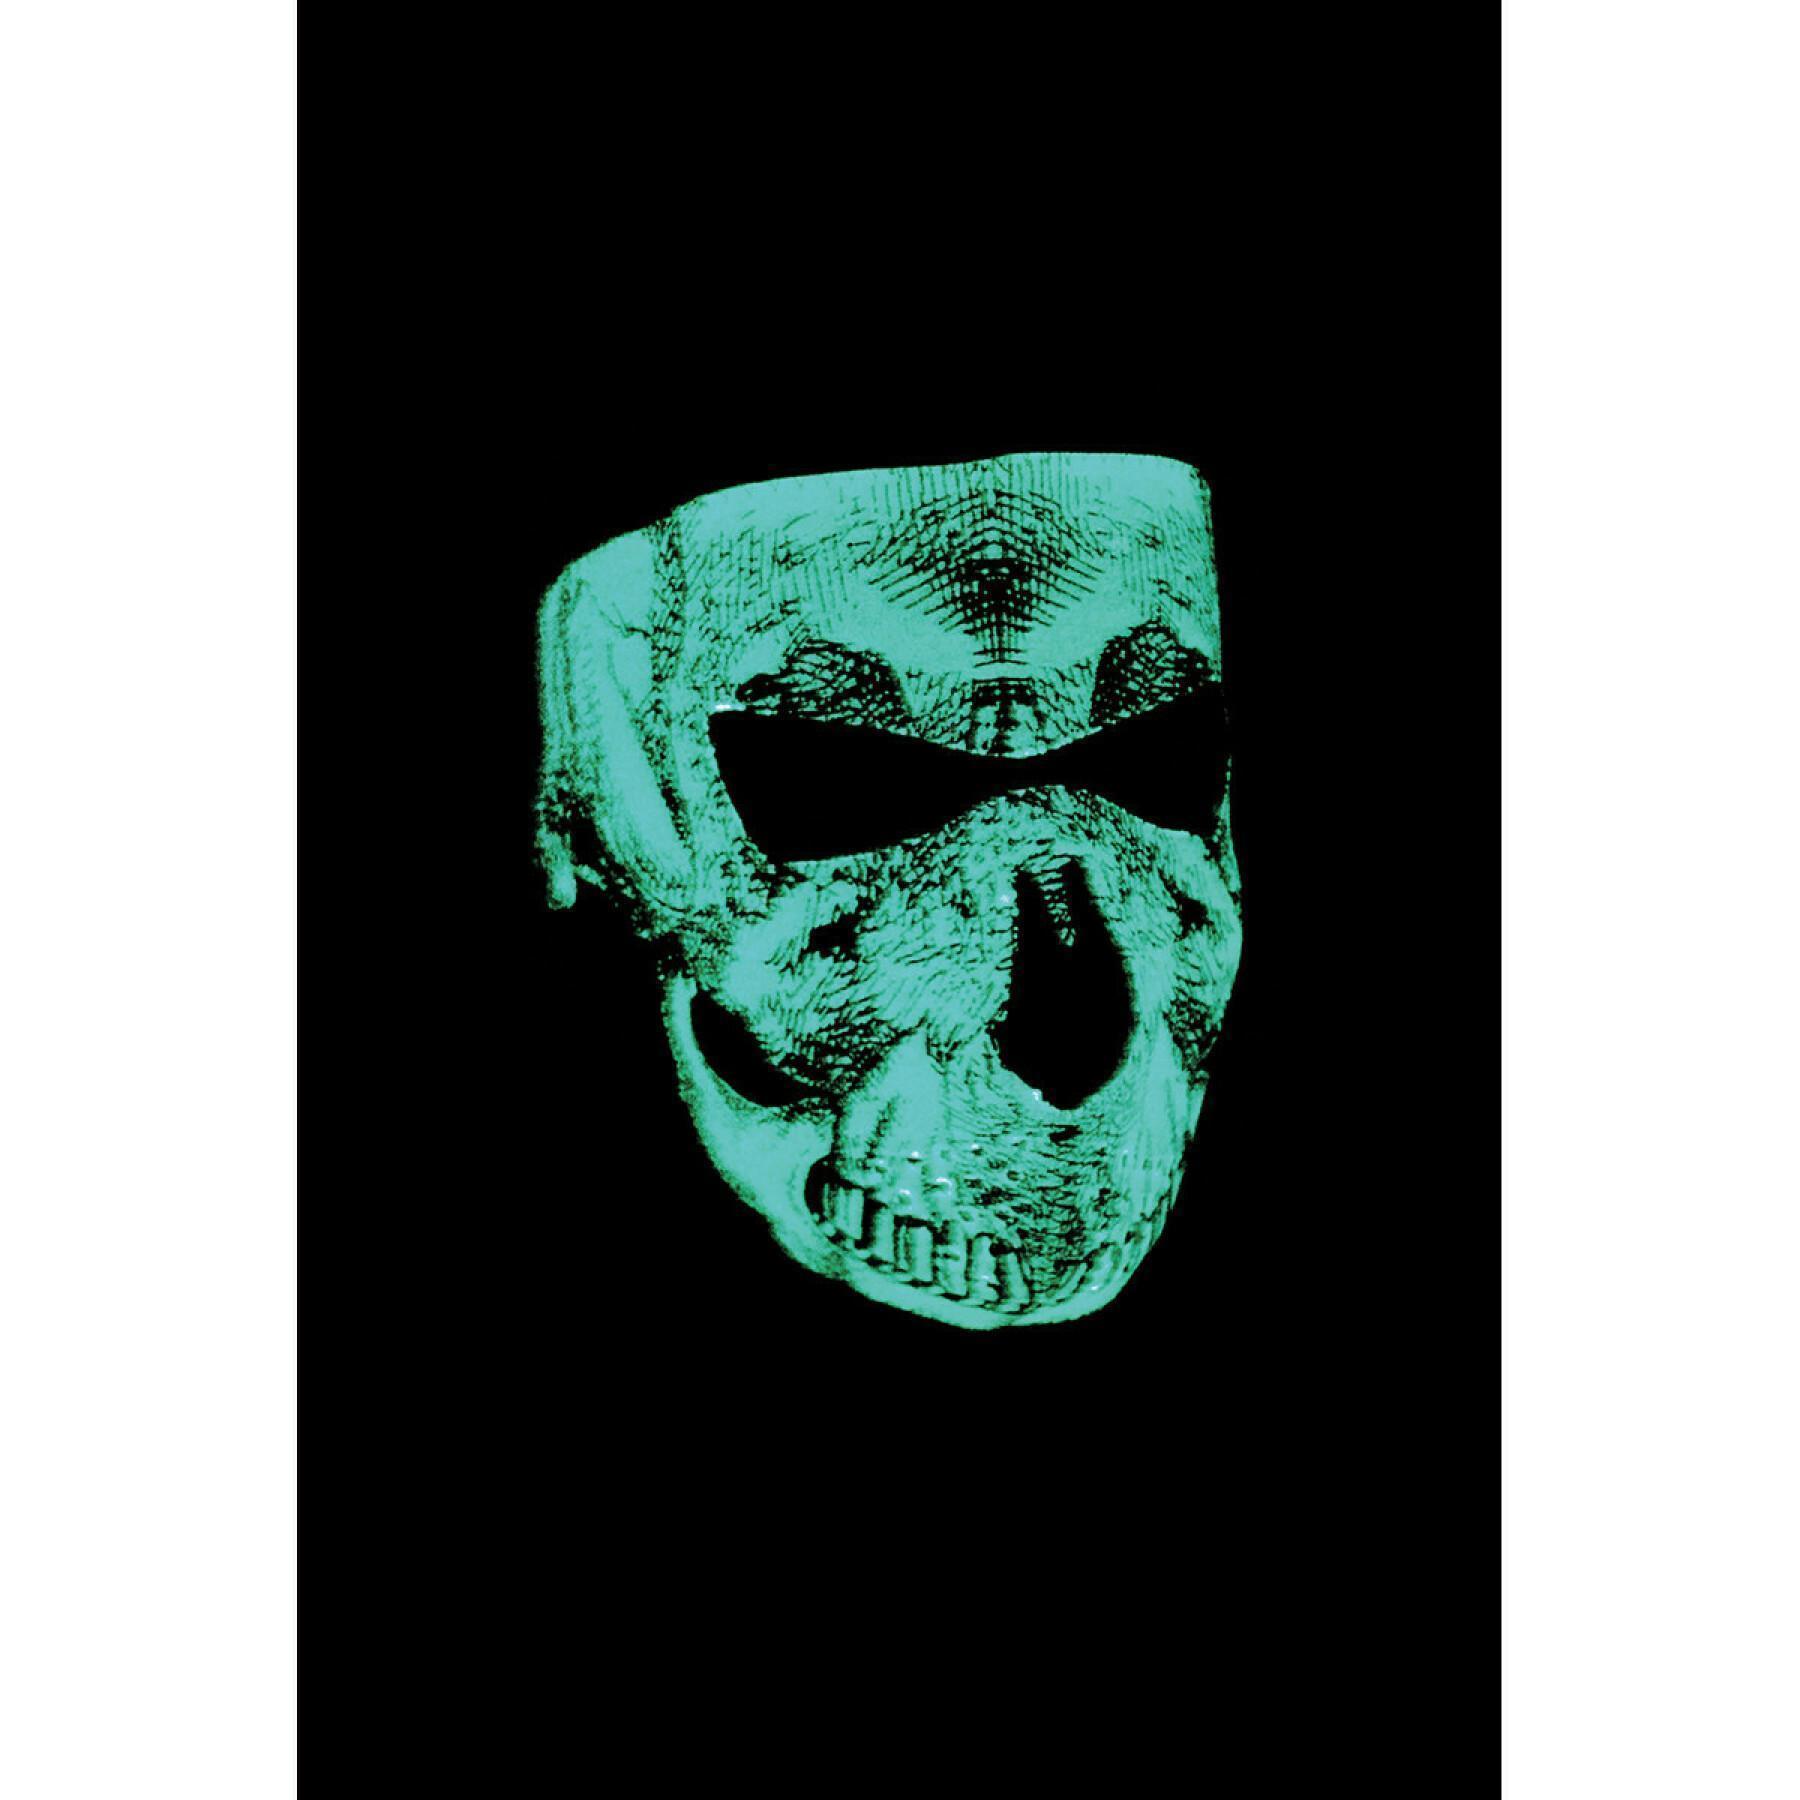 Cagoule moto Zan Headgear full face glow-in-the-dark skull